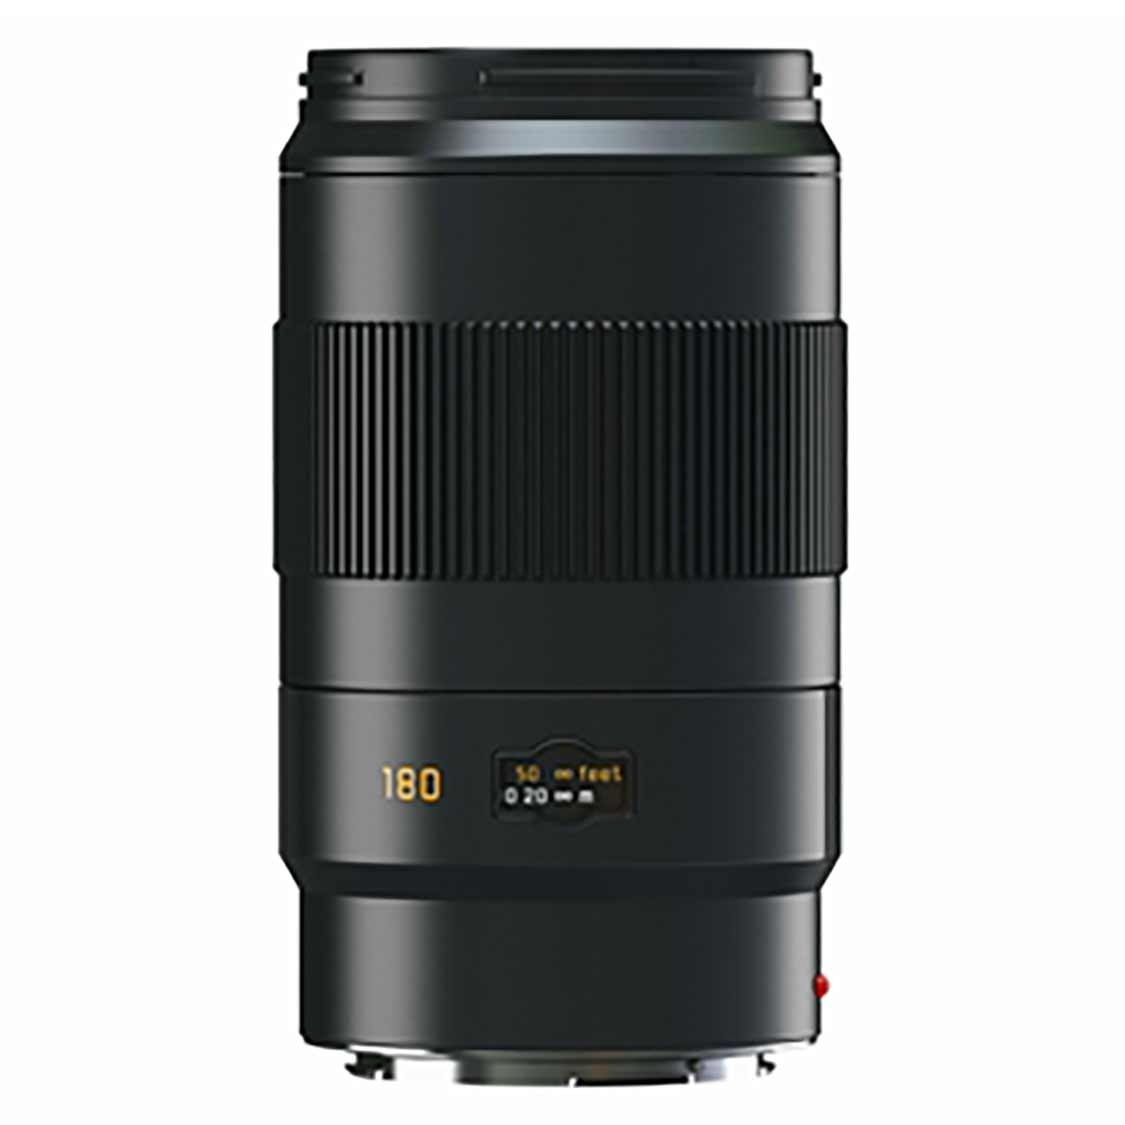 Leica S 180mm F3.5 Lens